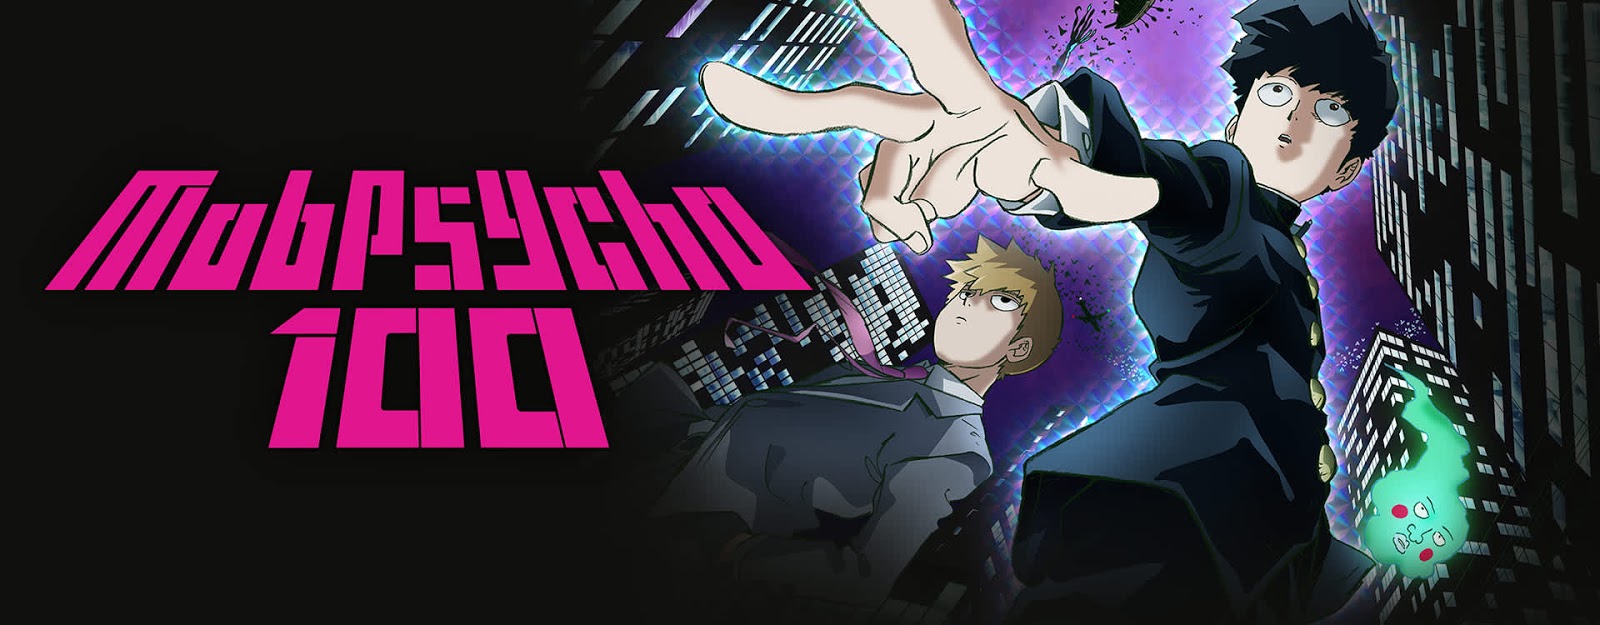 Mob Psycho 100 - 2º temporada dublada no Crunchyroll - AkibaSpace